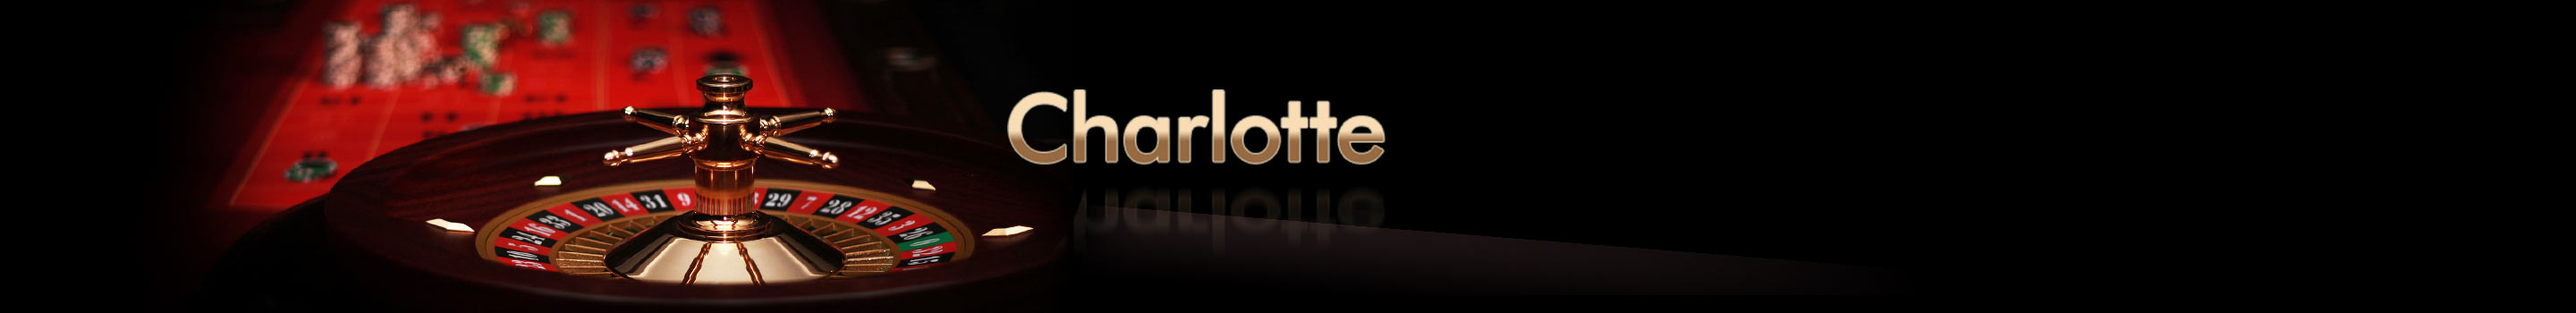 Das Charlotte Roulette-System